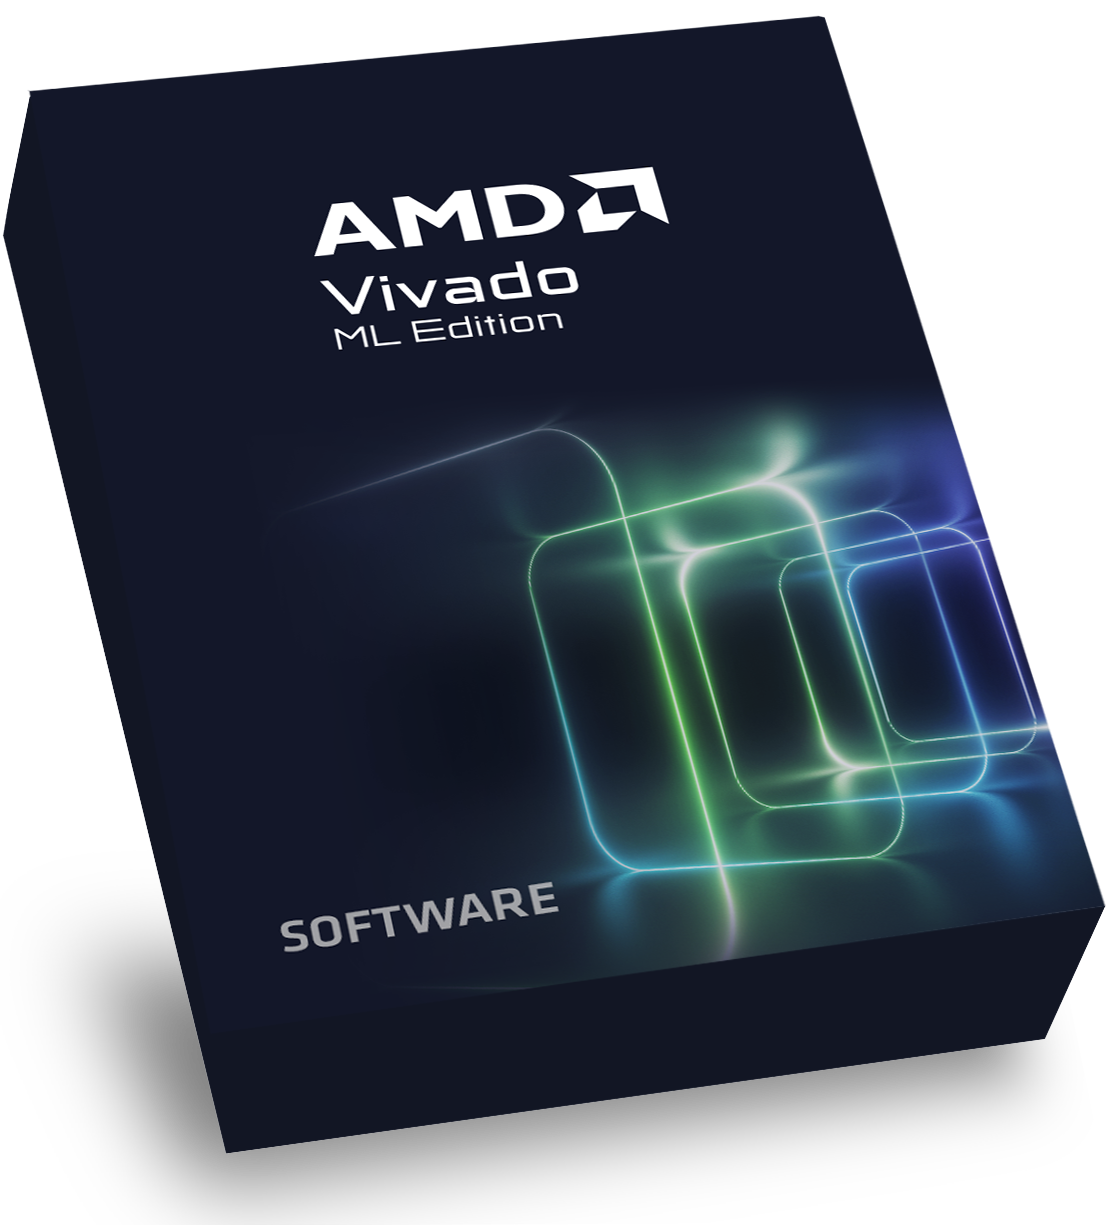 vivado-ml-software-box-2-1